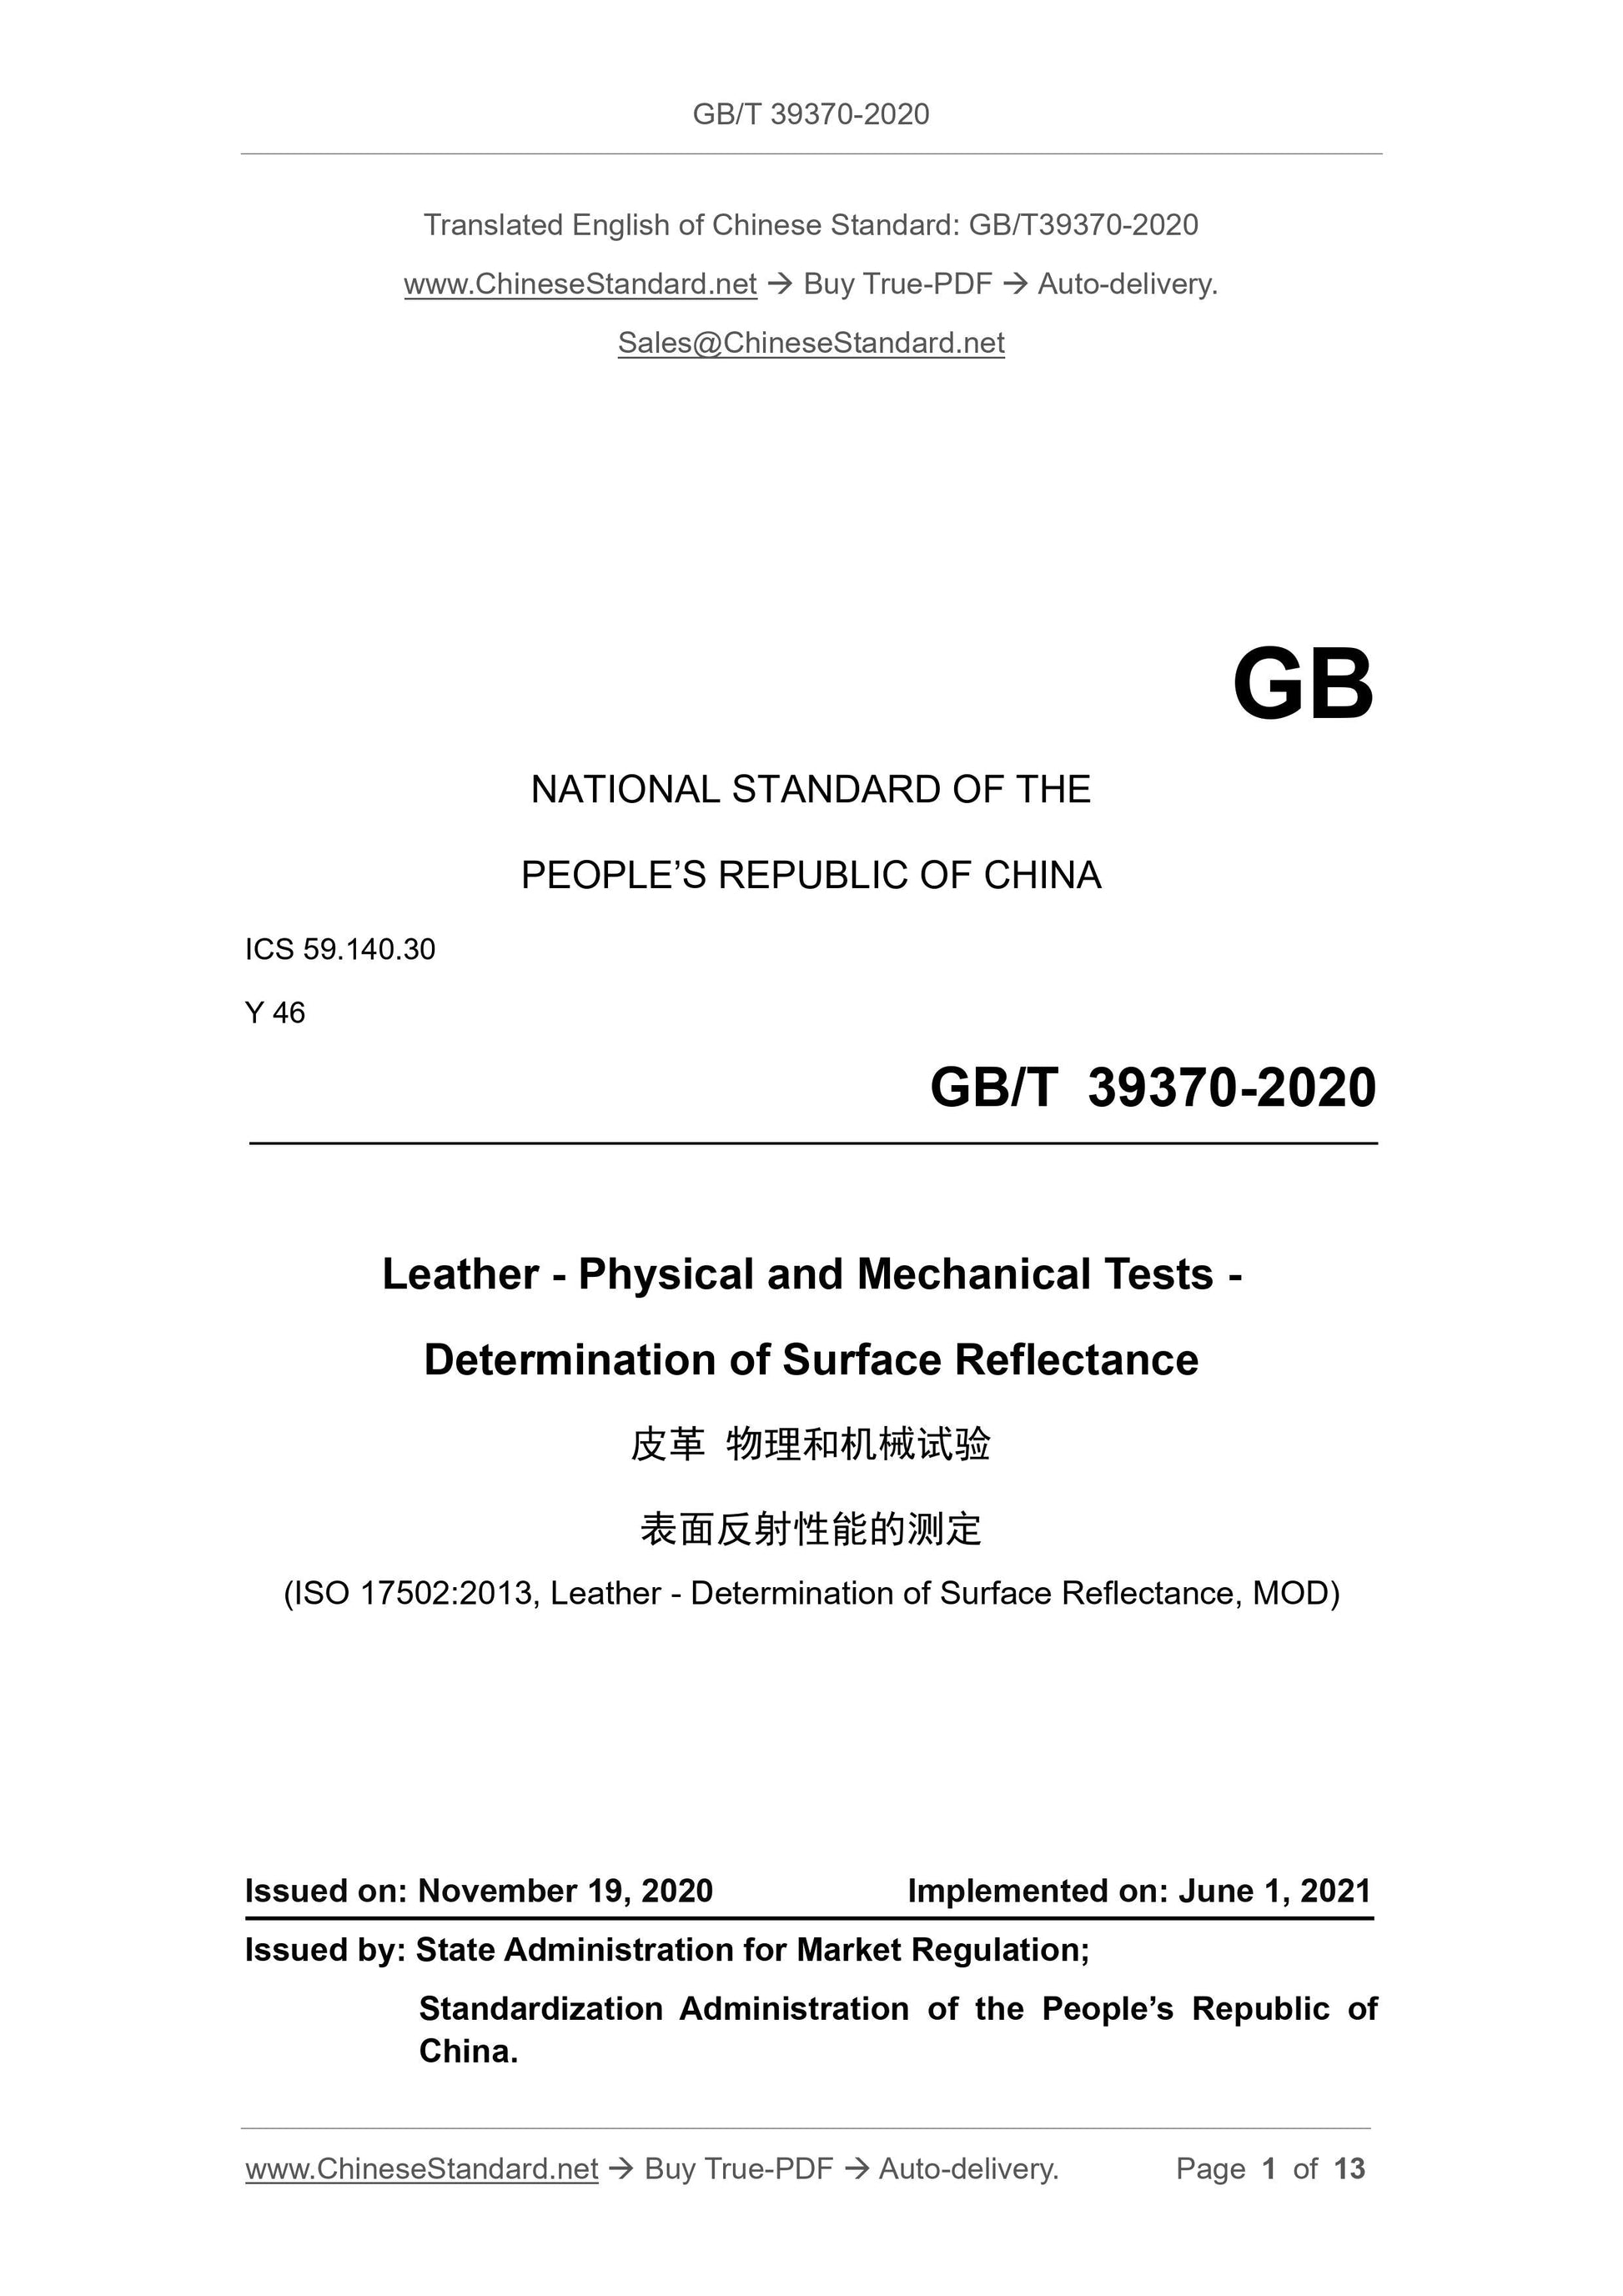 GBT39370-2020 Page 1